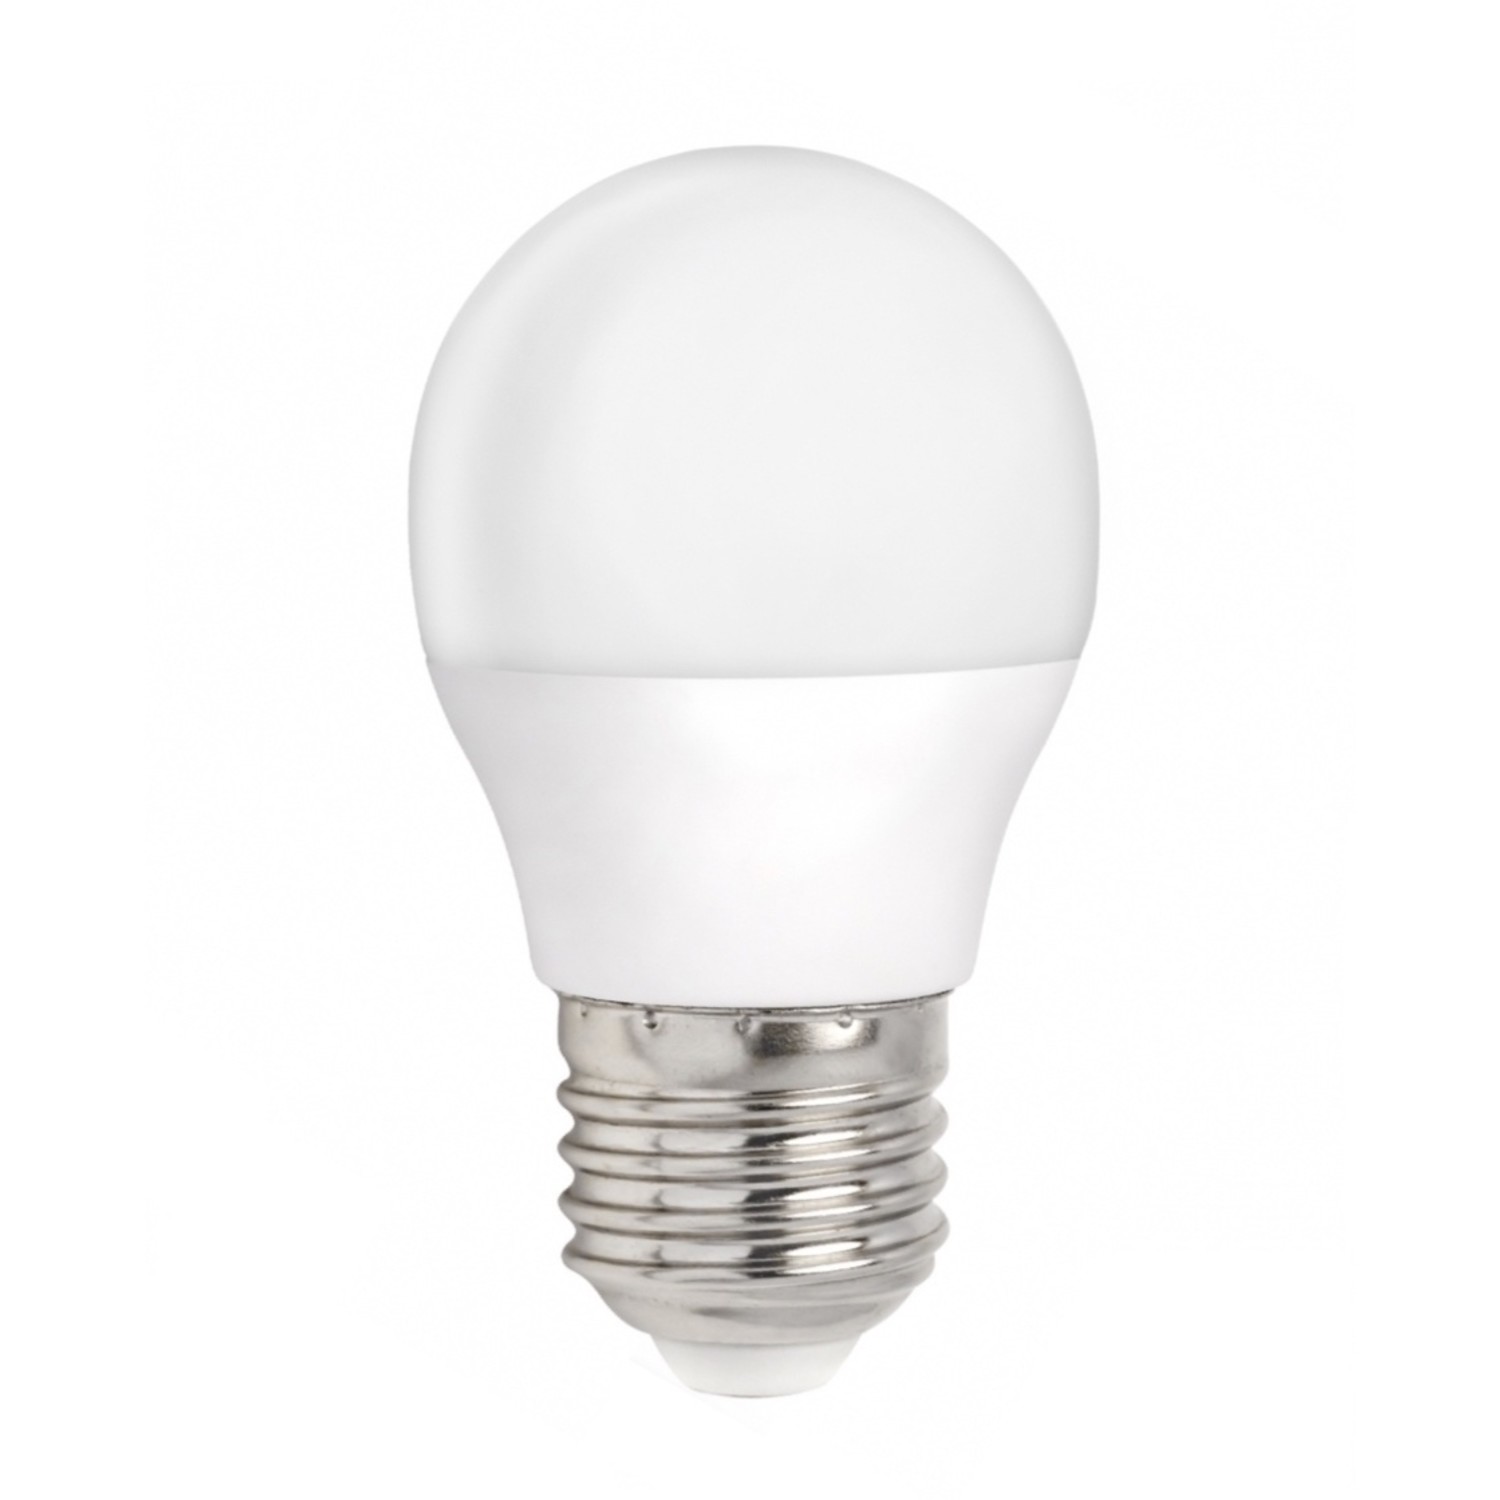 Discriminatie elkaar Wauw LED lamp - E27 fitting - 3W vervangt 25W - Warm wit licht 3000K -  Ledlichtdiscounter.nl